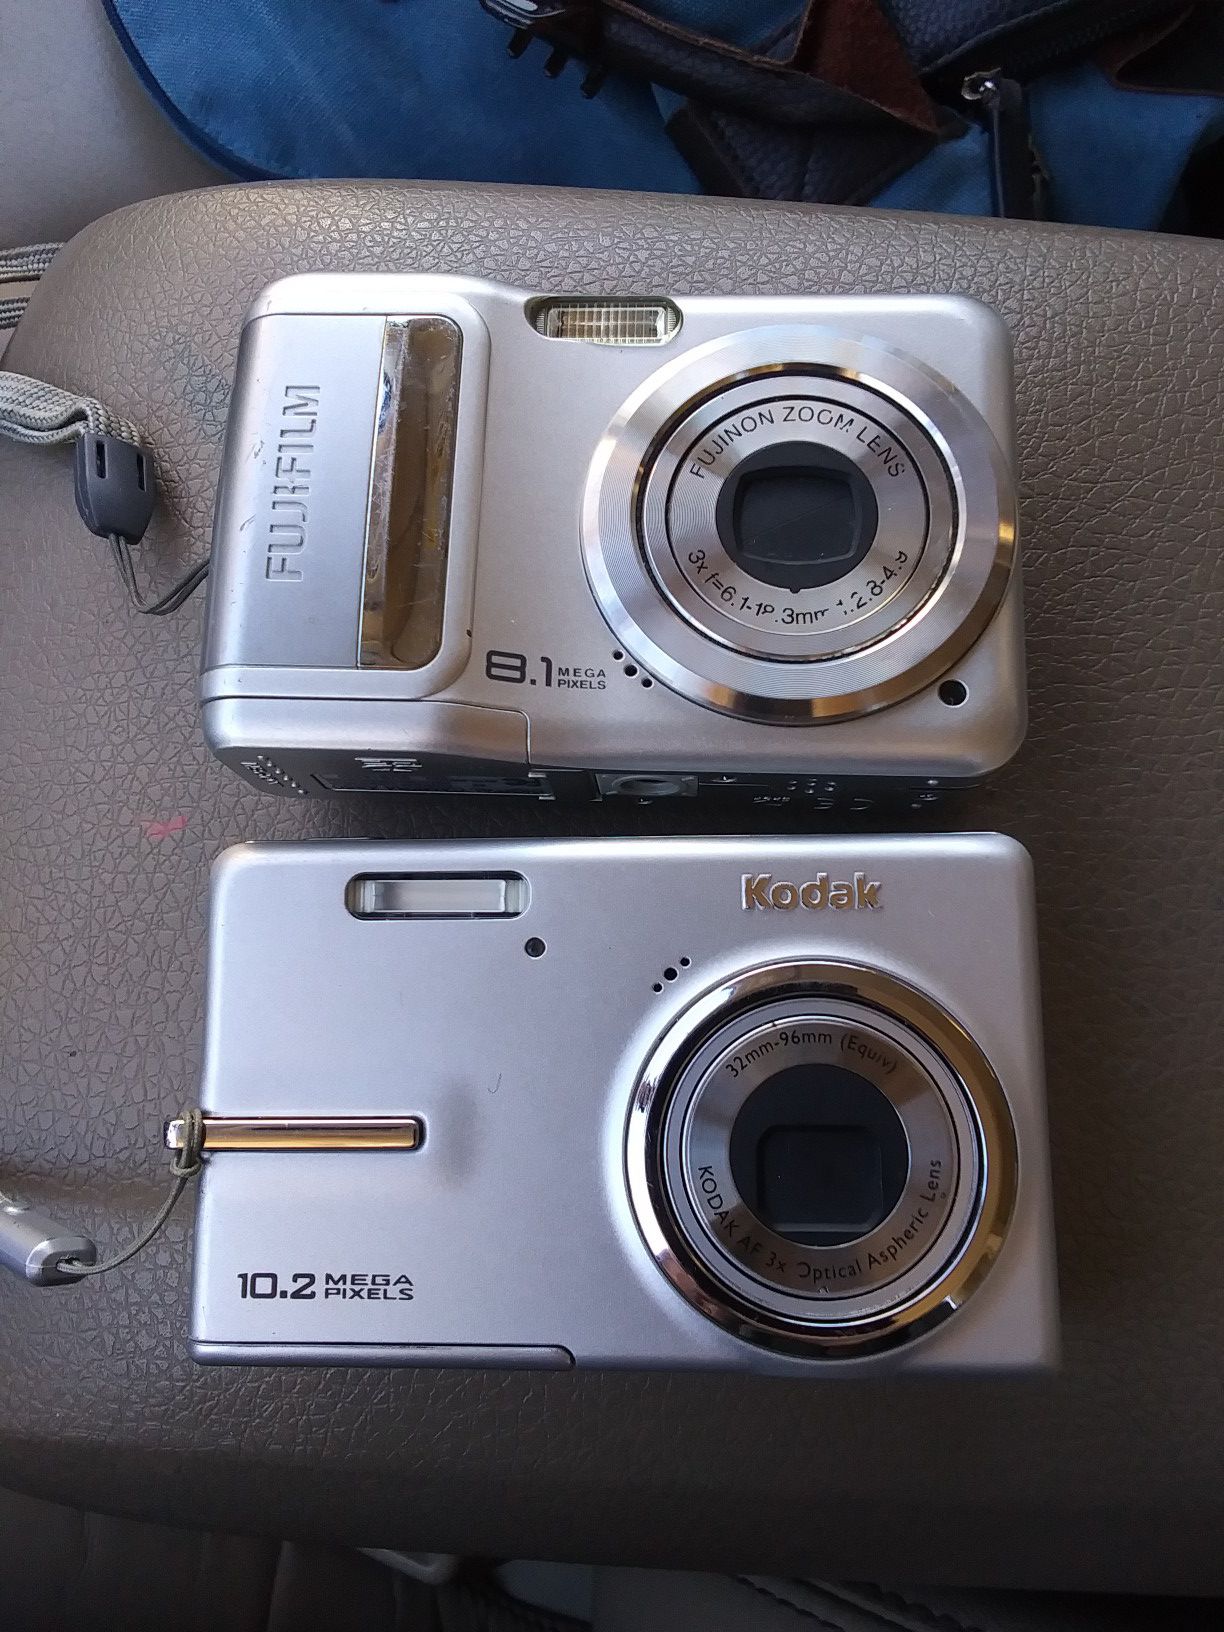 2 digital cameras